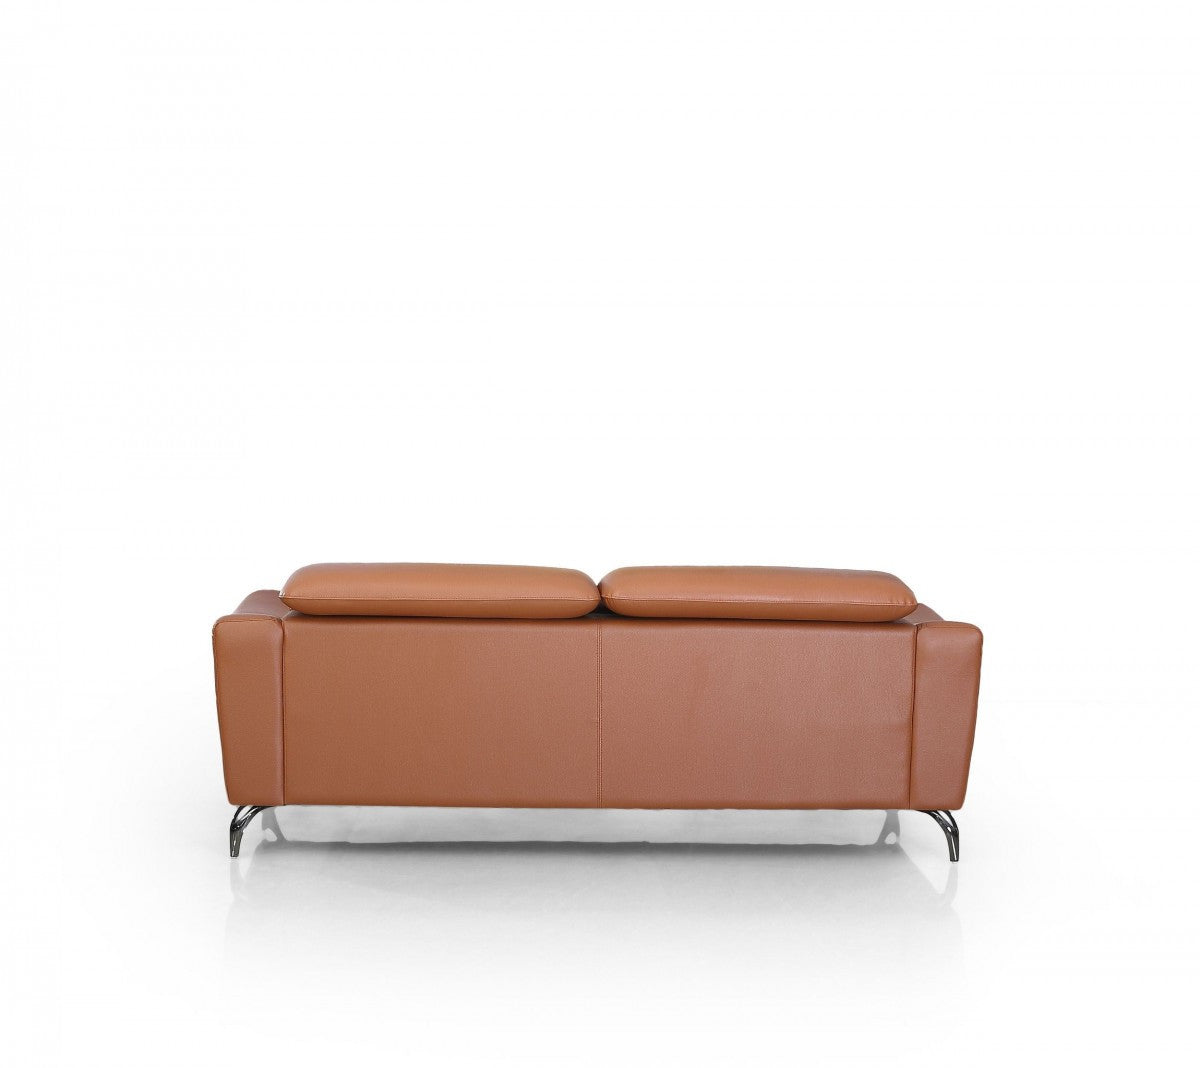 Divani Casa Danis Modern Cognac Leather Brown Sofa